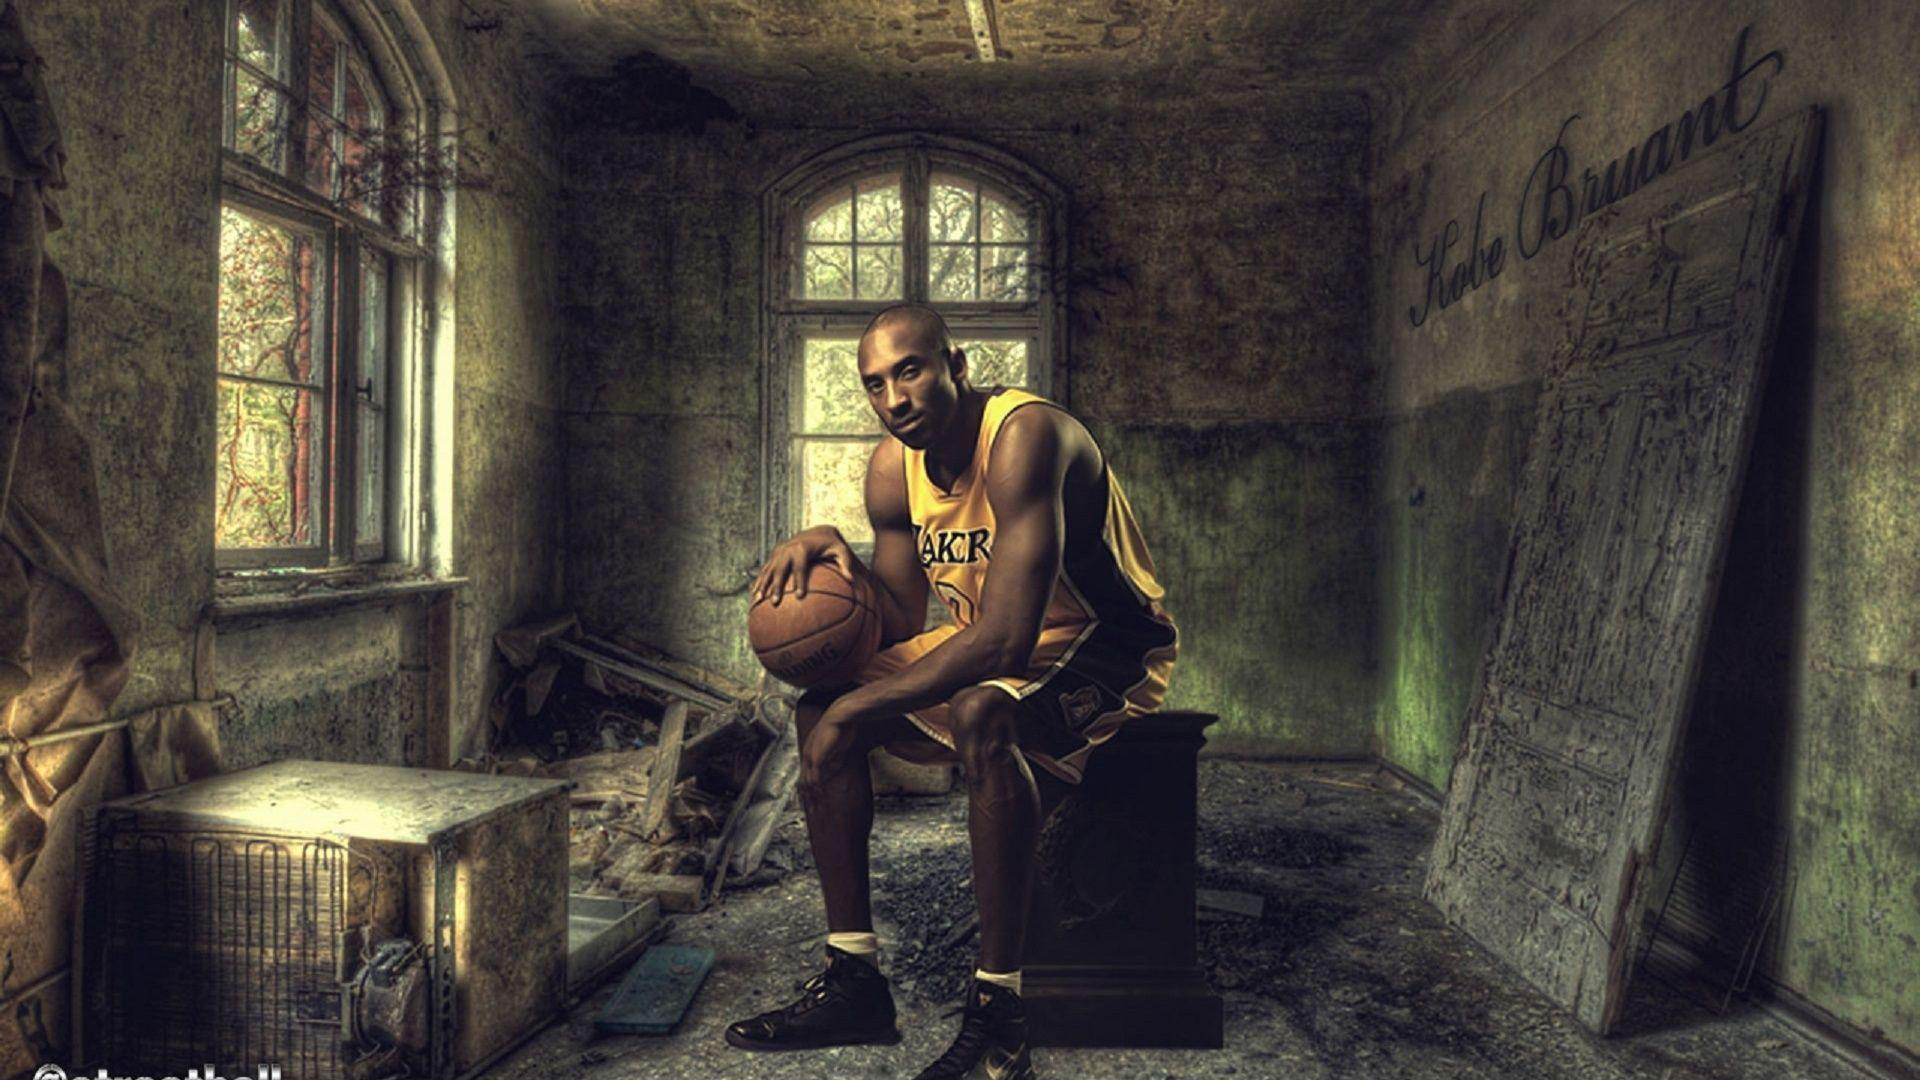 Kobe Bryant Is Sitting With A Ball In A Dirty Room 2K Kobe Bean Bryant